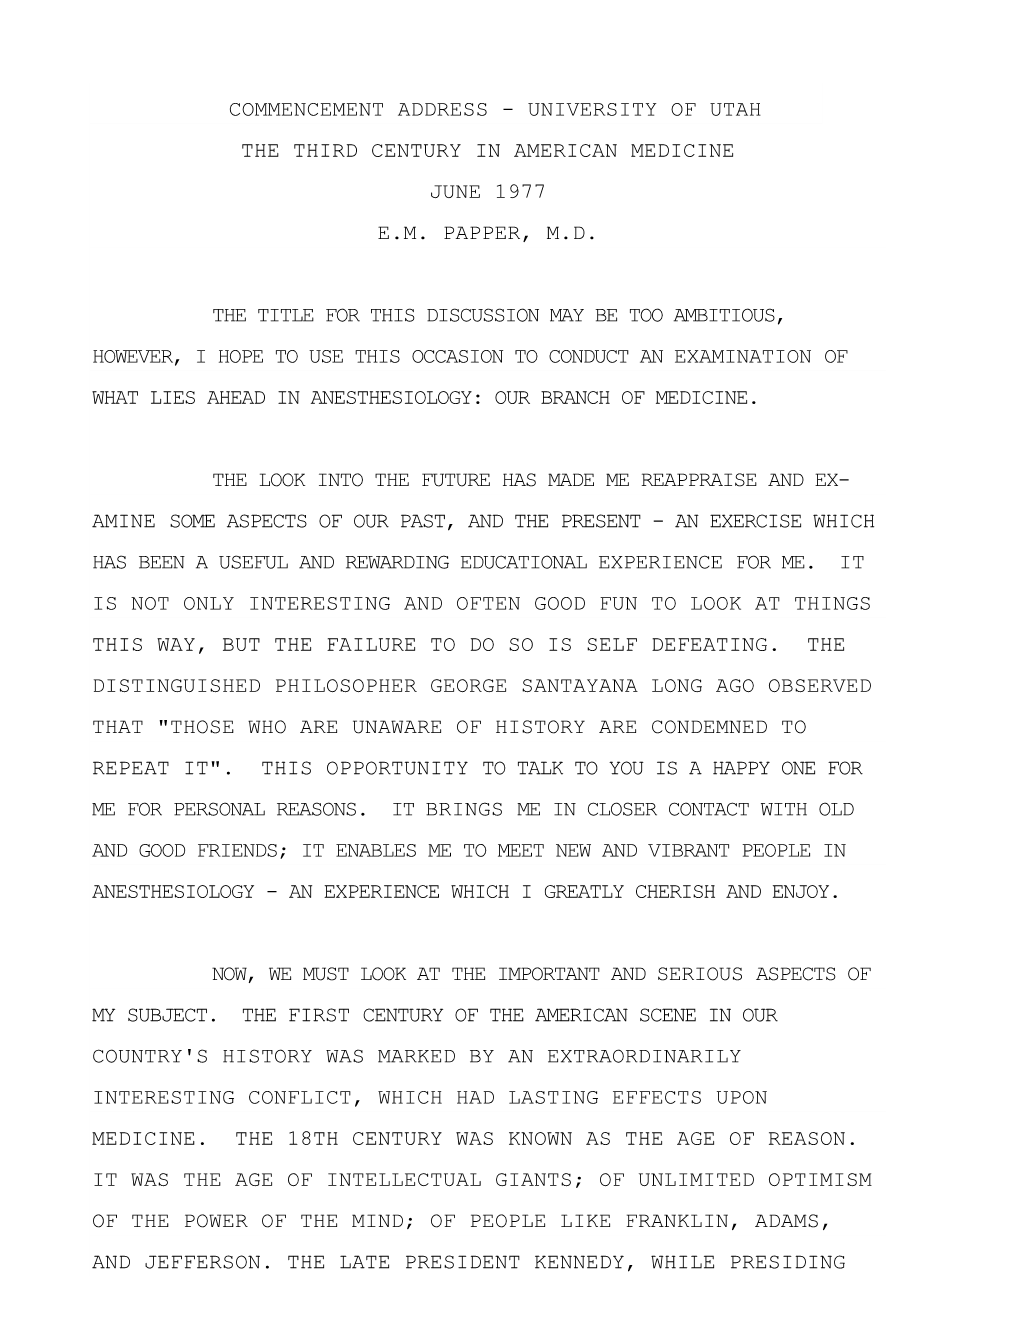 Commencement Address - University of Utah the Third Century in American Medicine June 1977 E.M